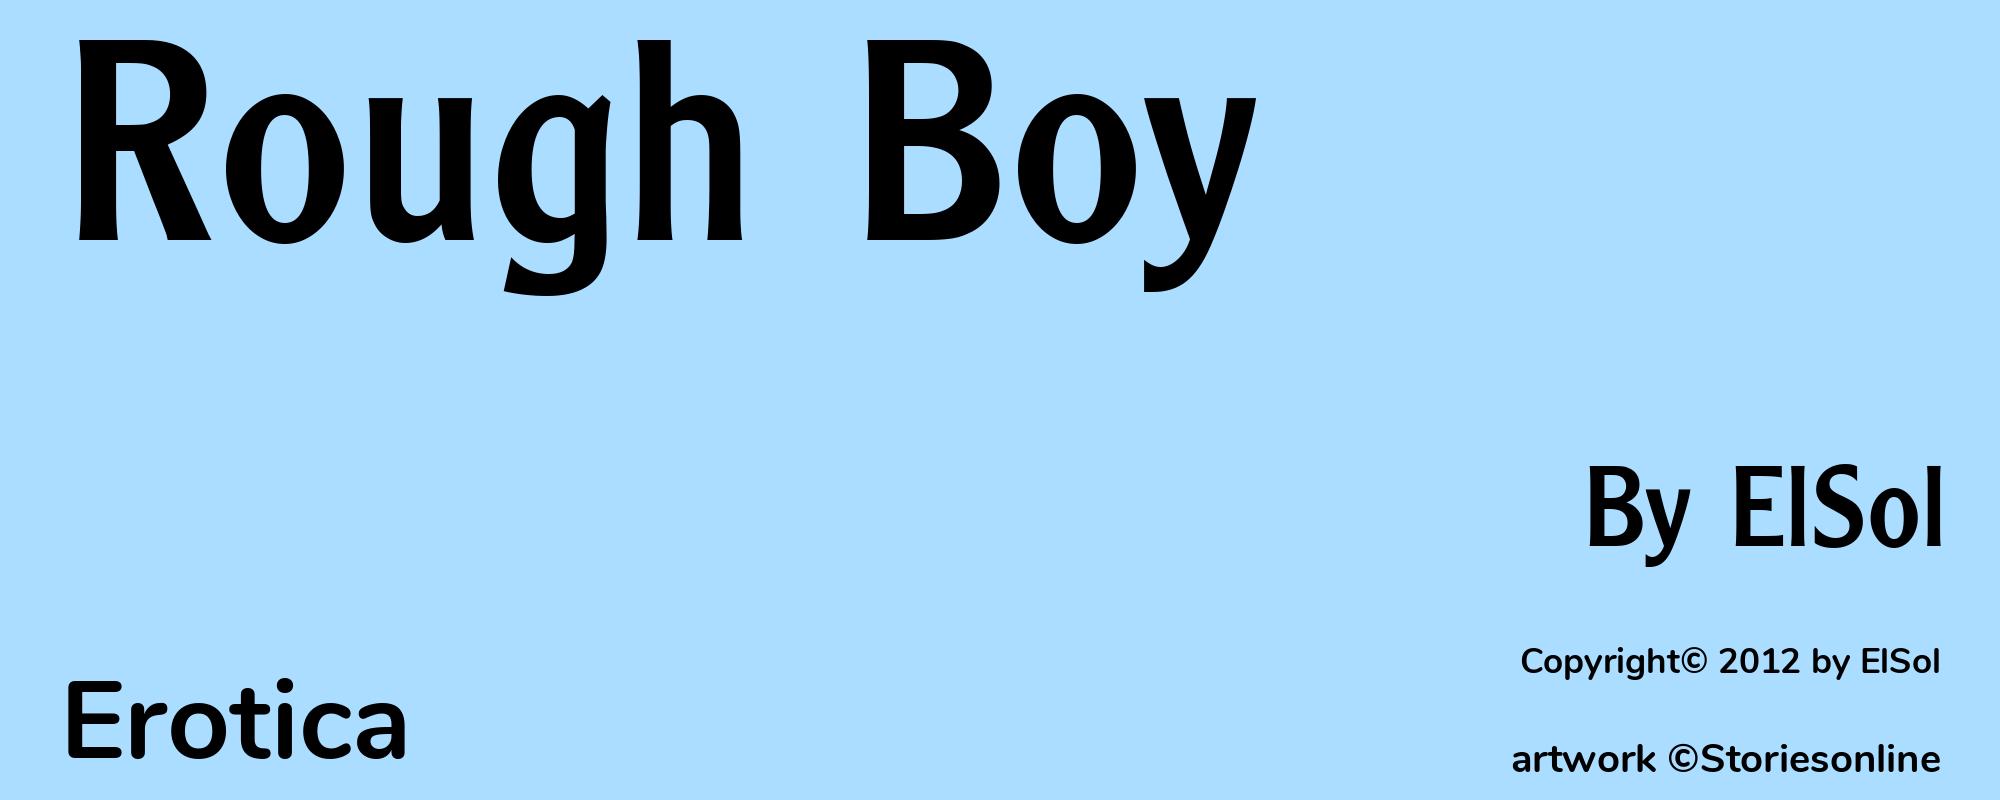 Rough Boy - Cover